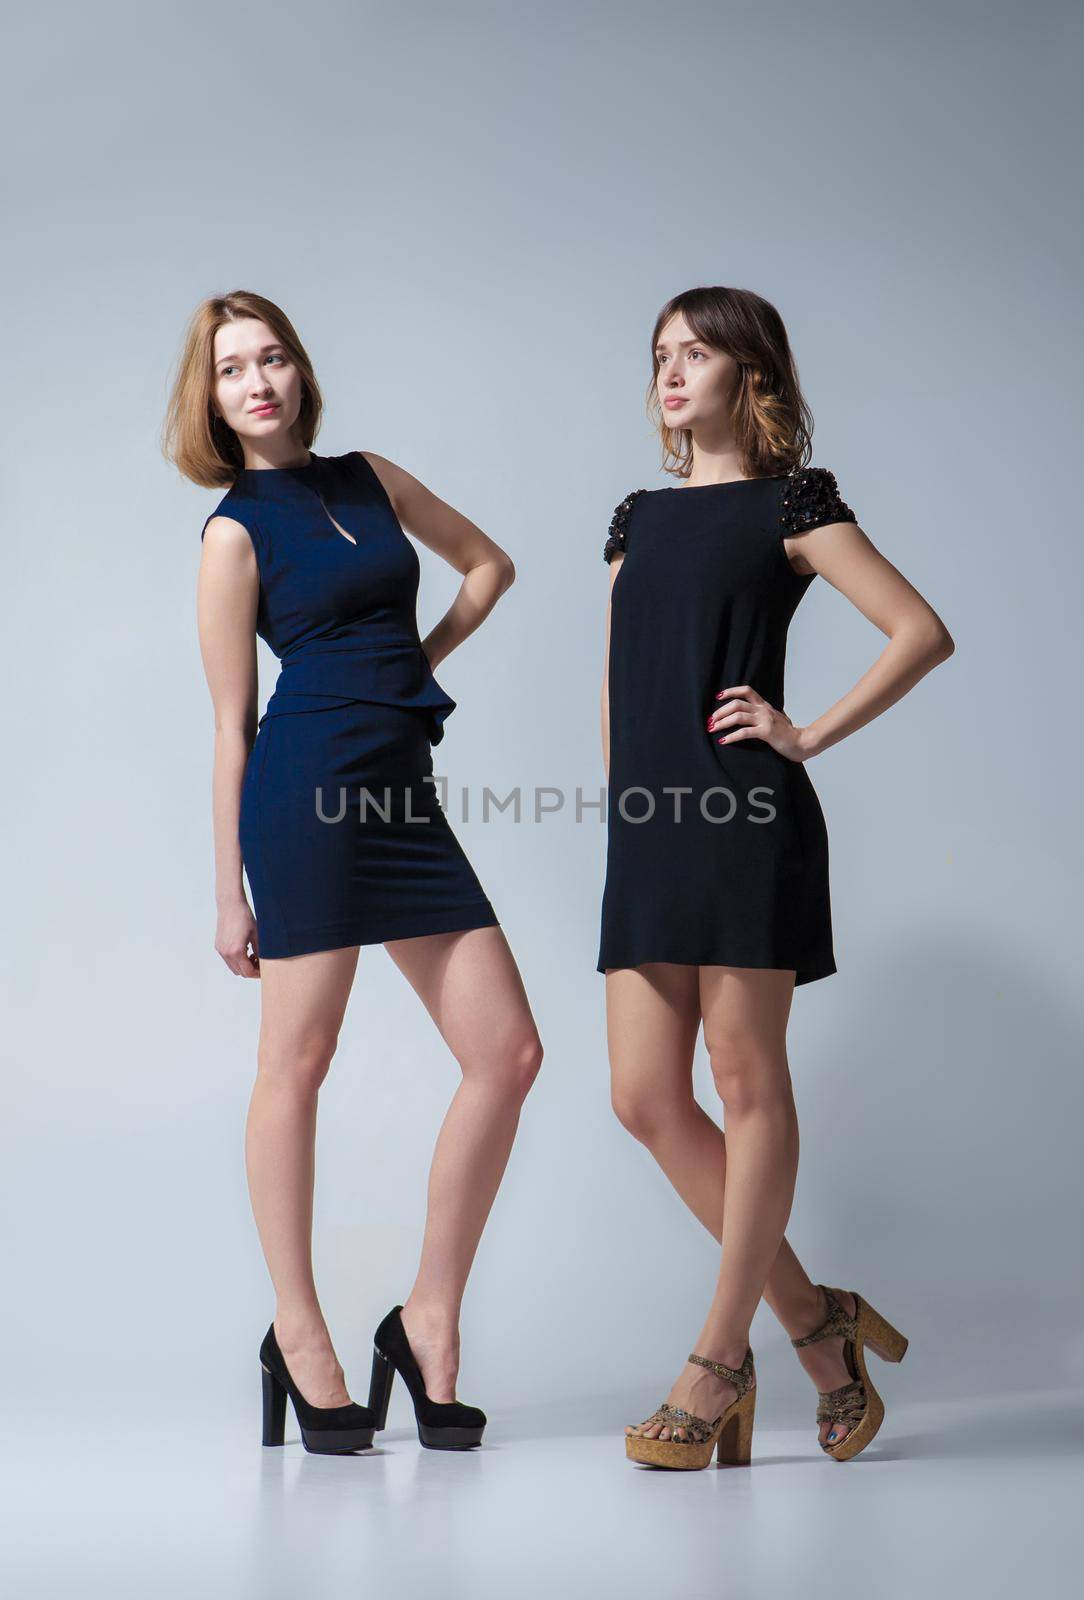 Two beautiful woman posing in a fancy dresses. Studio shooting